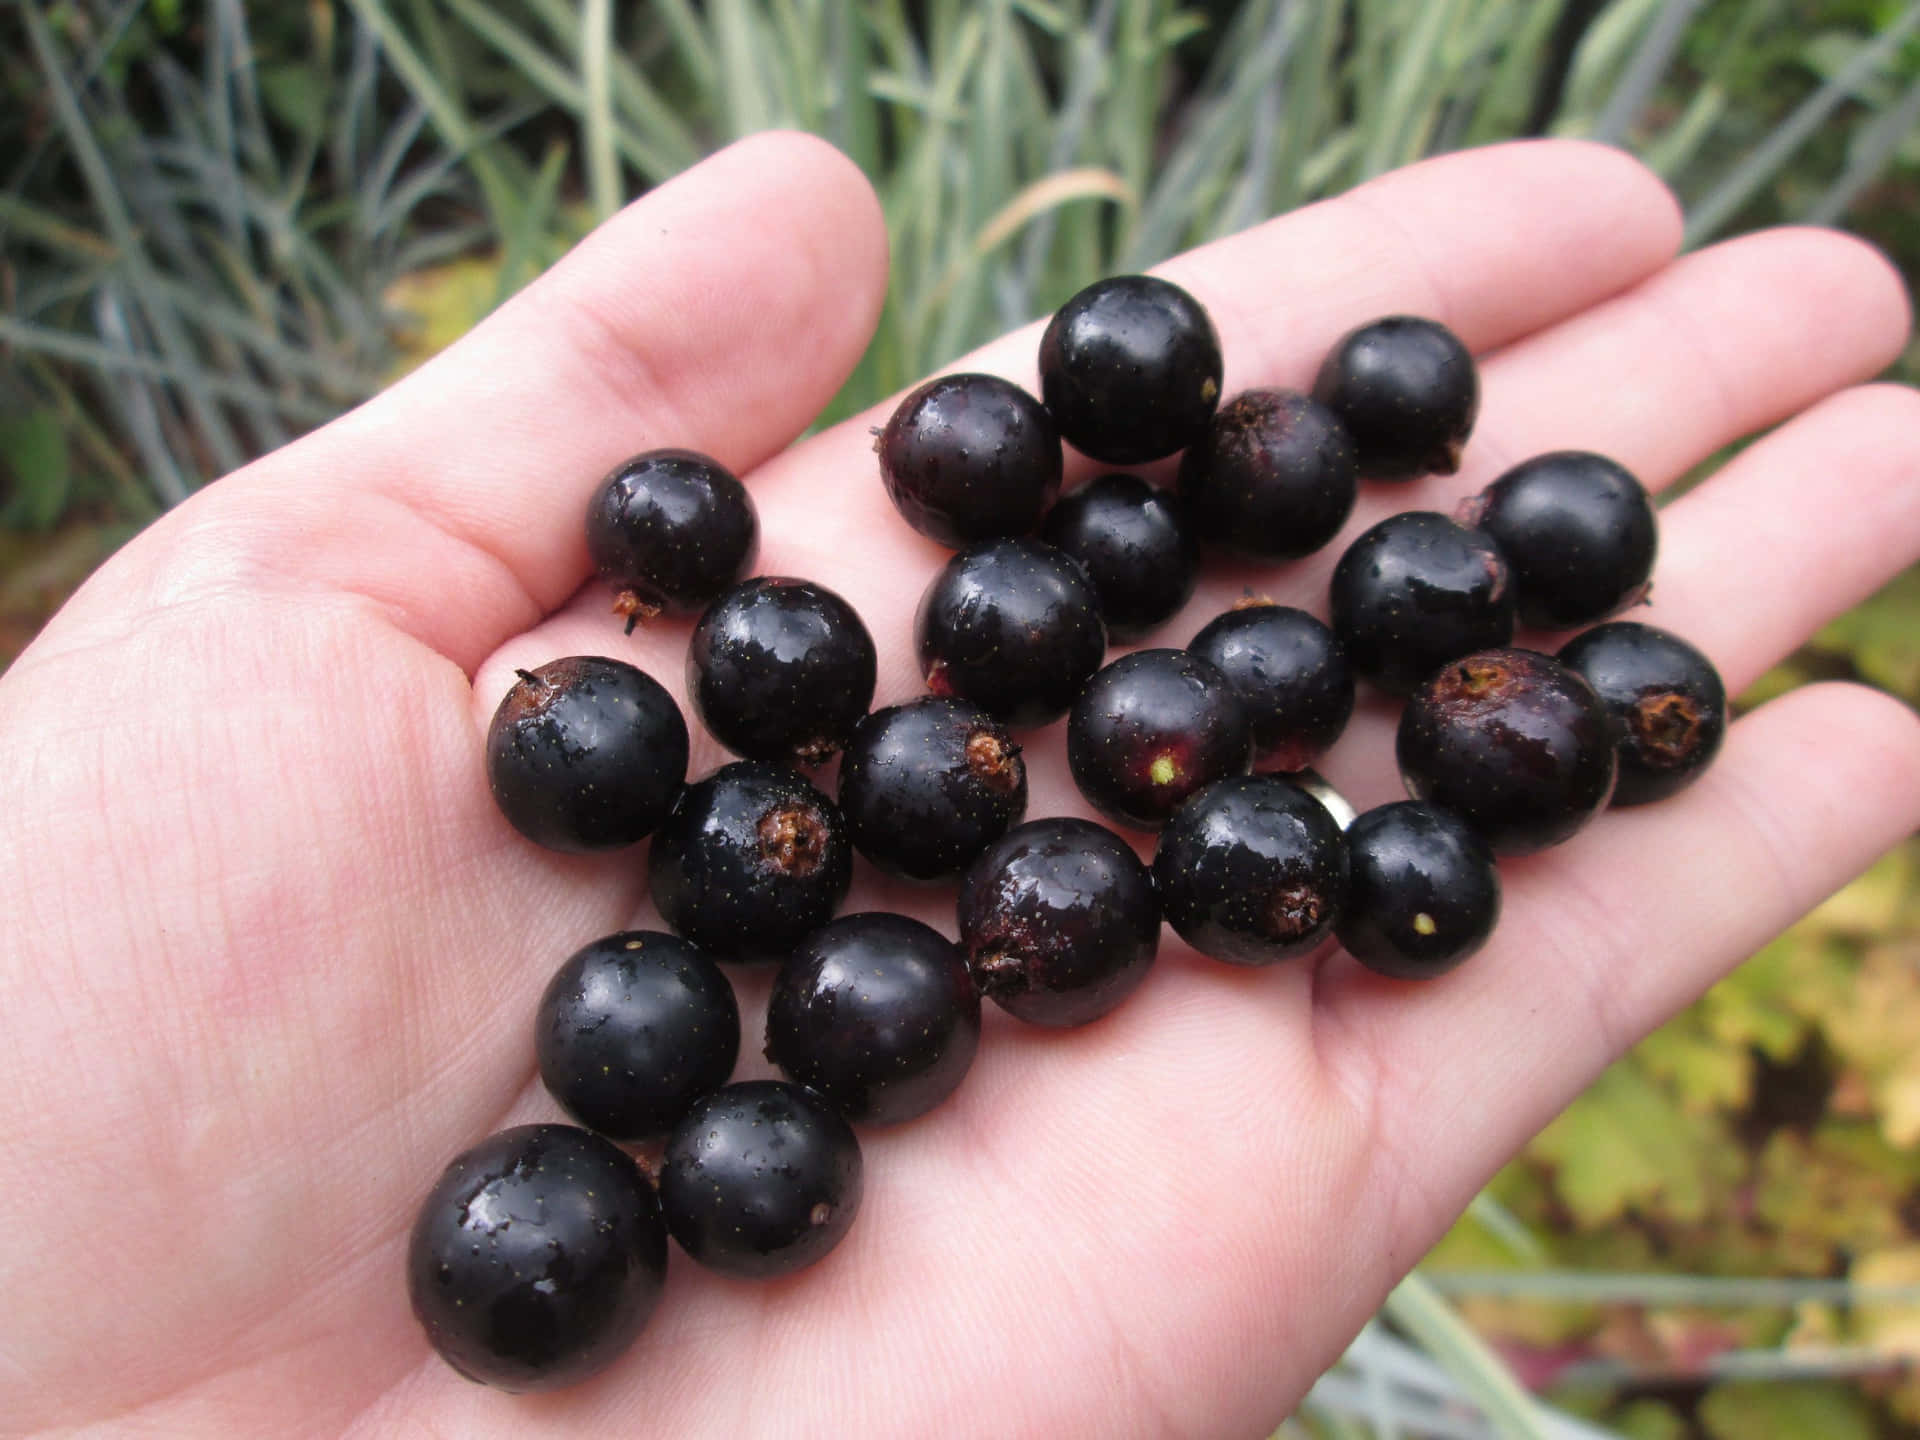 Ripe black currants growing on a bush. Wallpaper